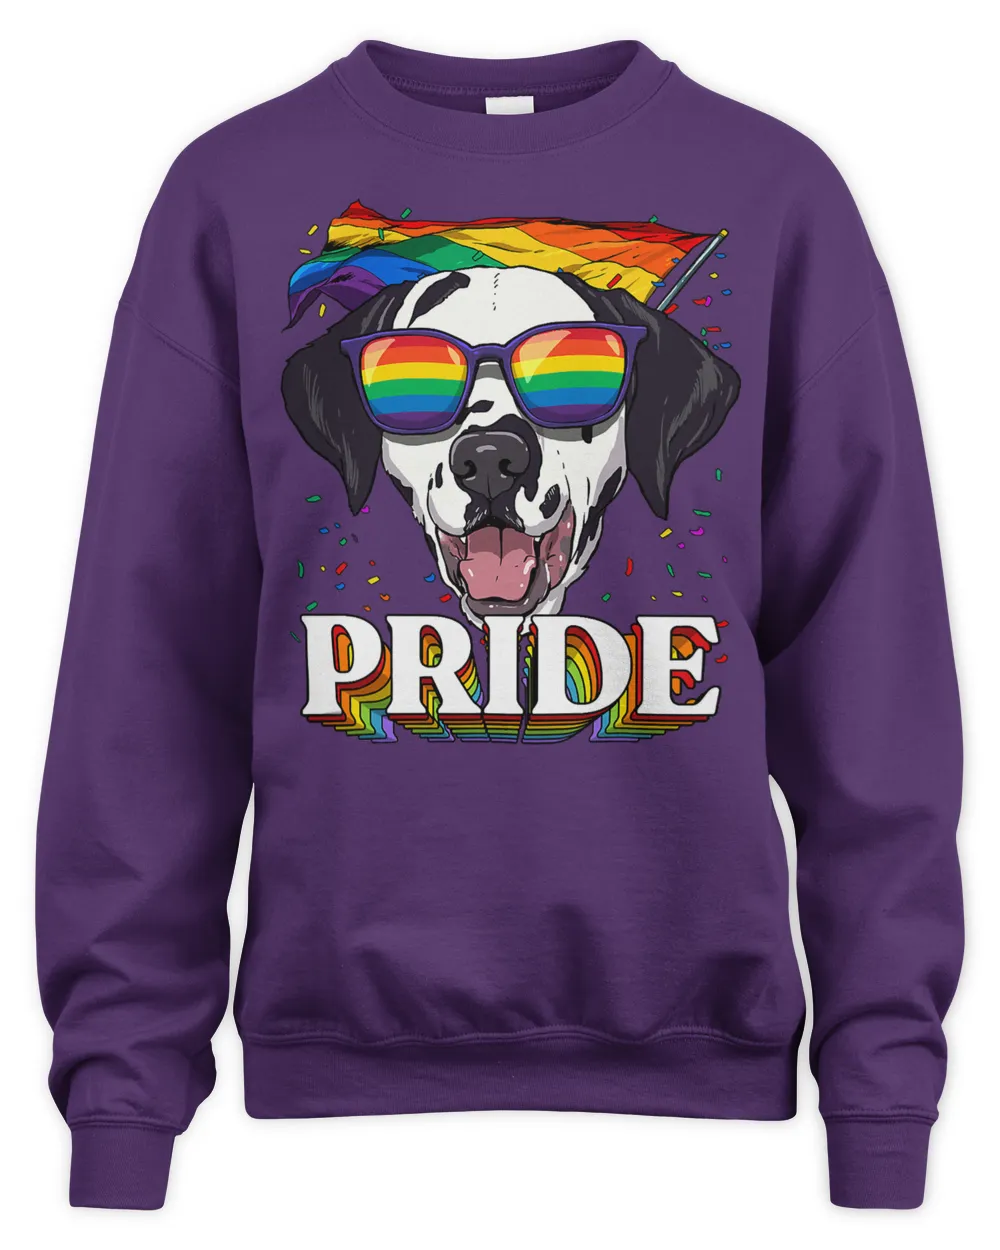 Dalmatian Funny Dog LGBT Dalmatian Gay Pride LGBTQ Rainbow Flag Sunglasses 12 Dalmatian Lover